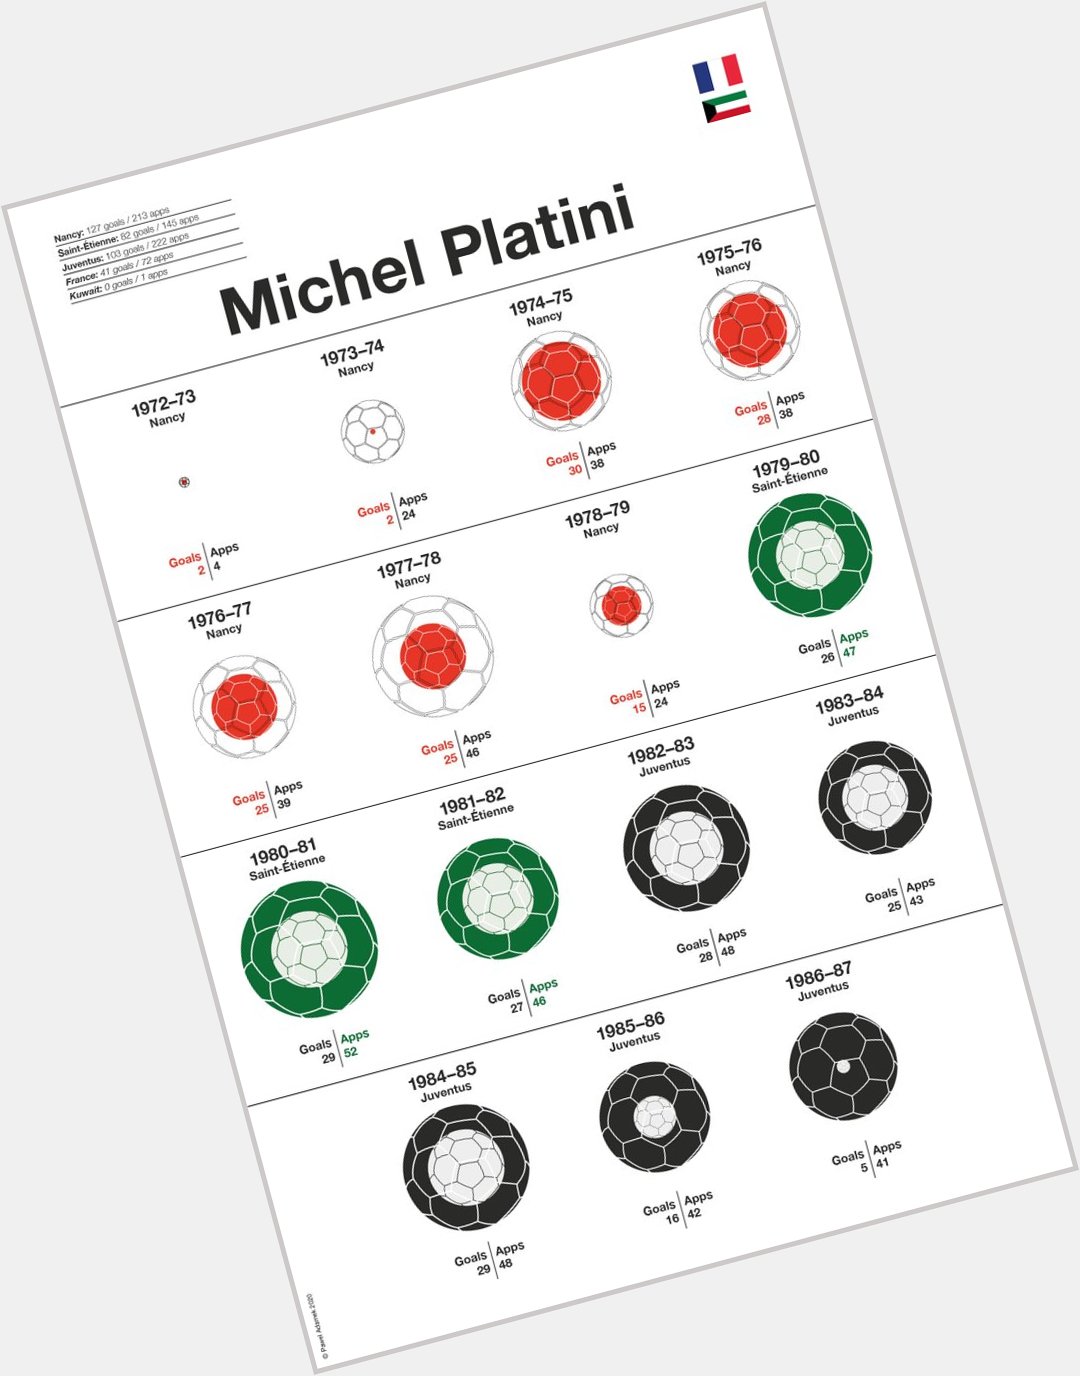 Happy Birthday to France and Kuwait international, Michel Platini!           